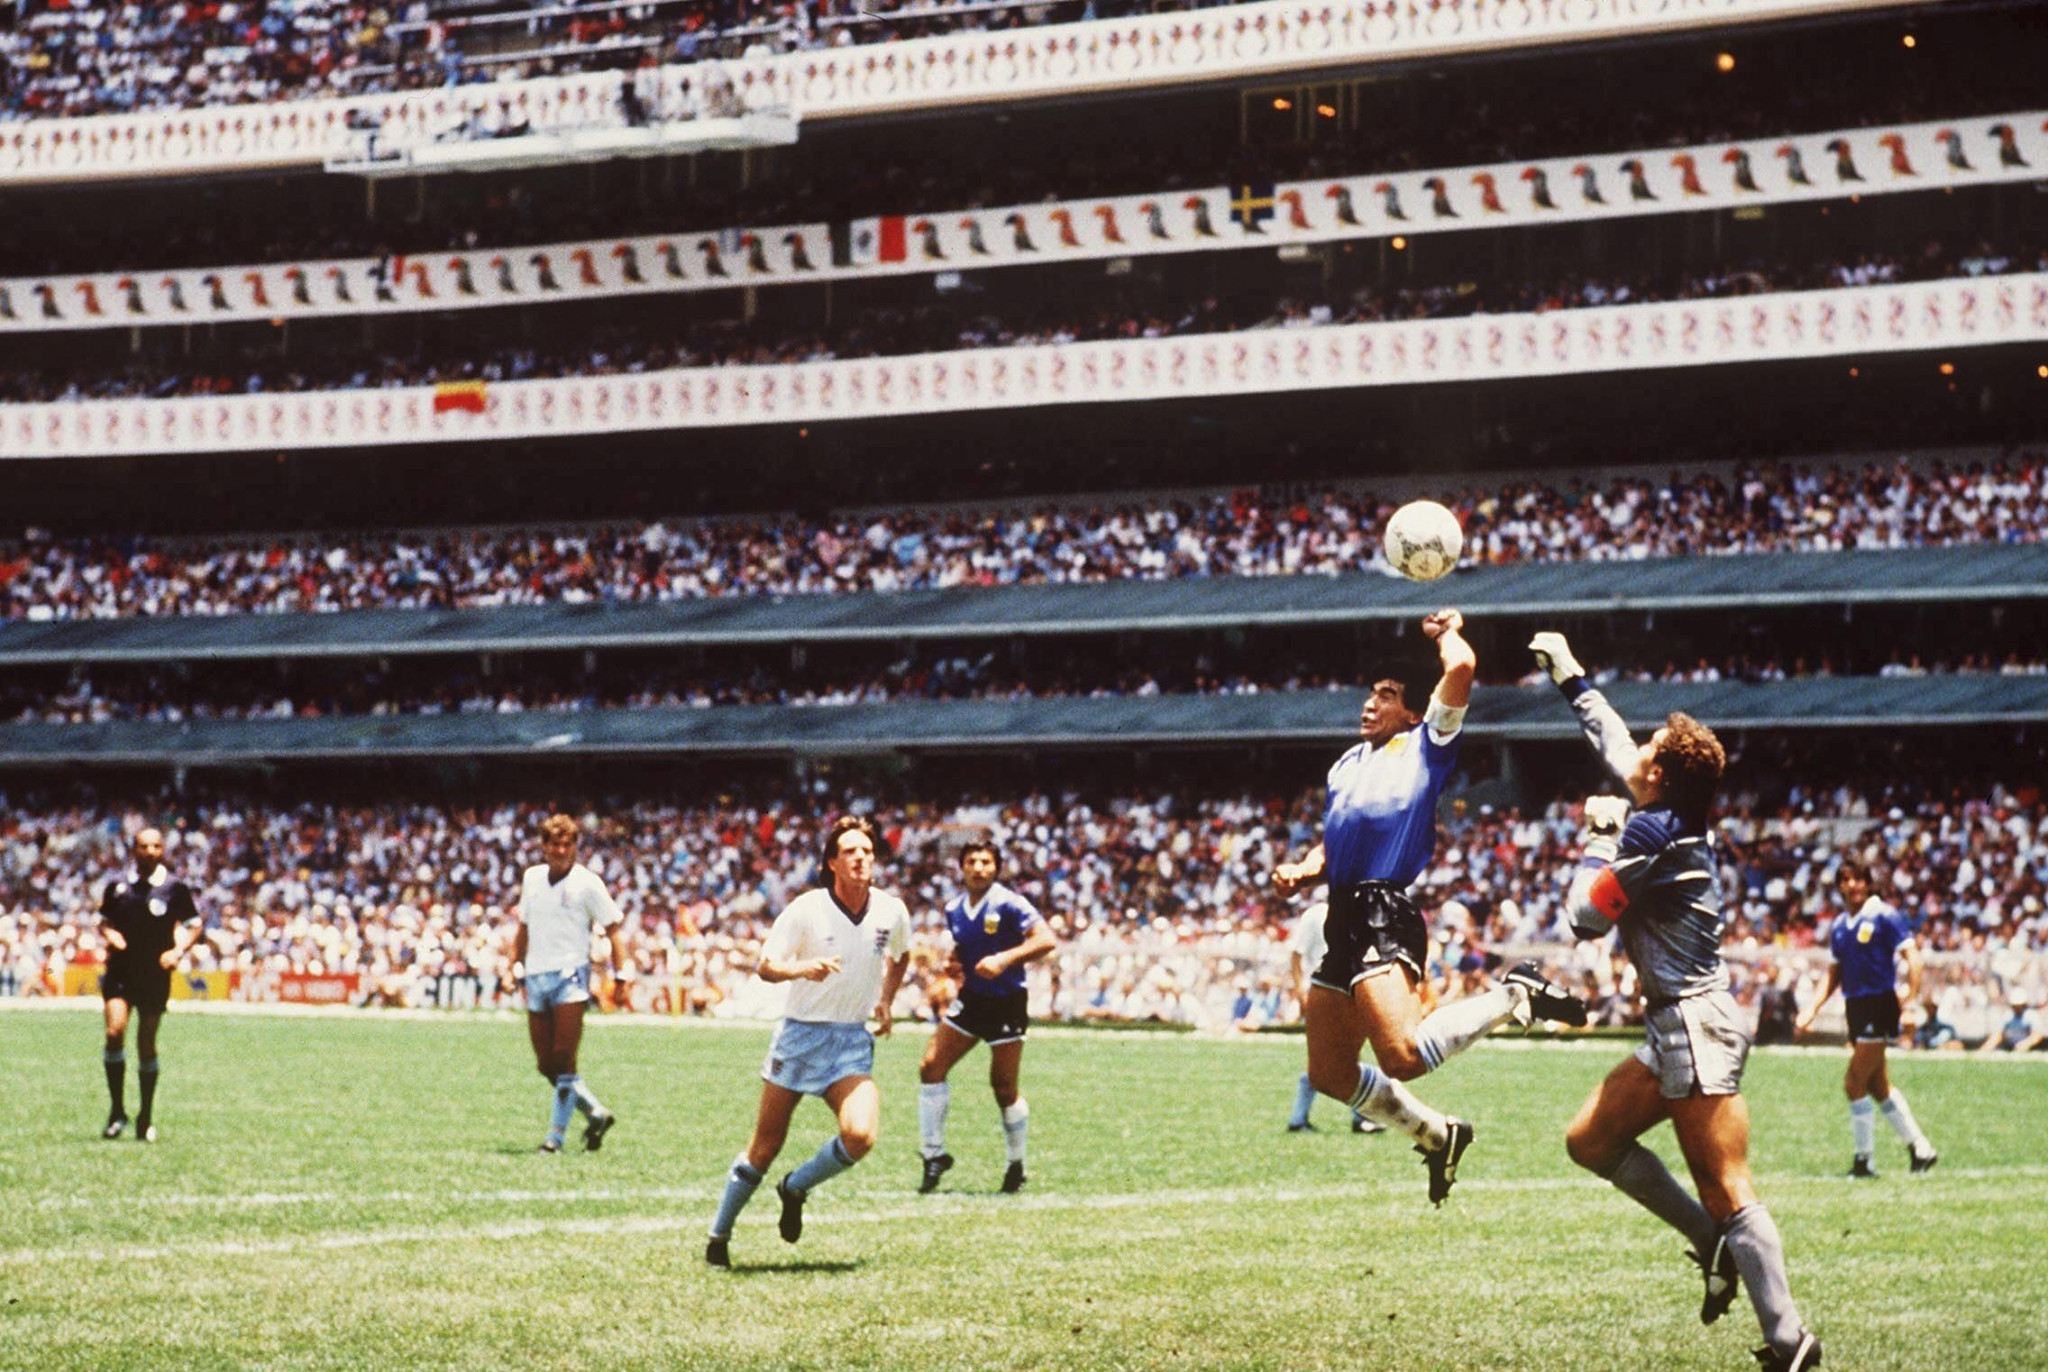 Diego Maradona scored the infamous 